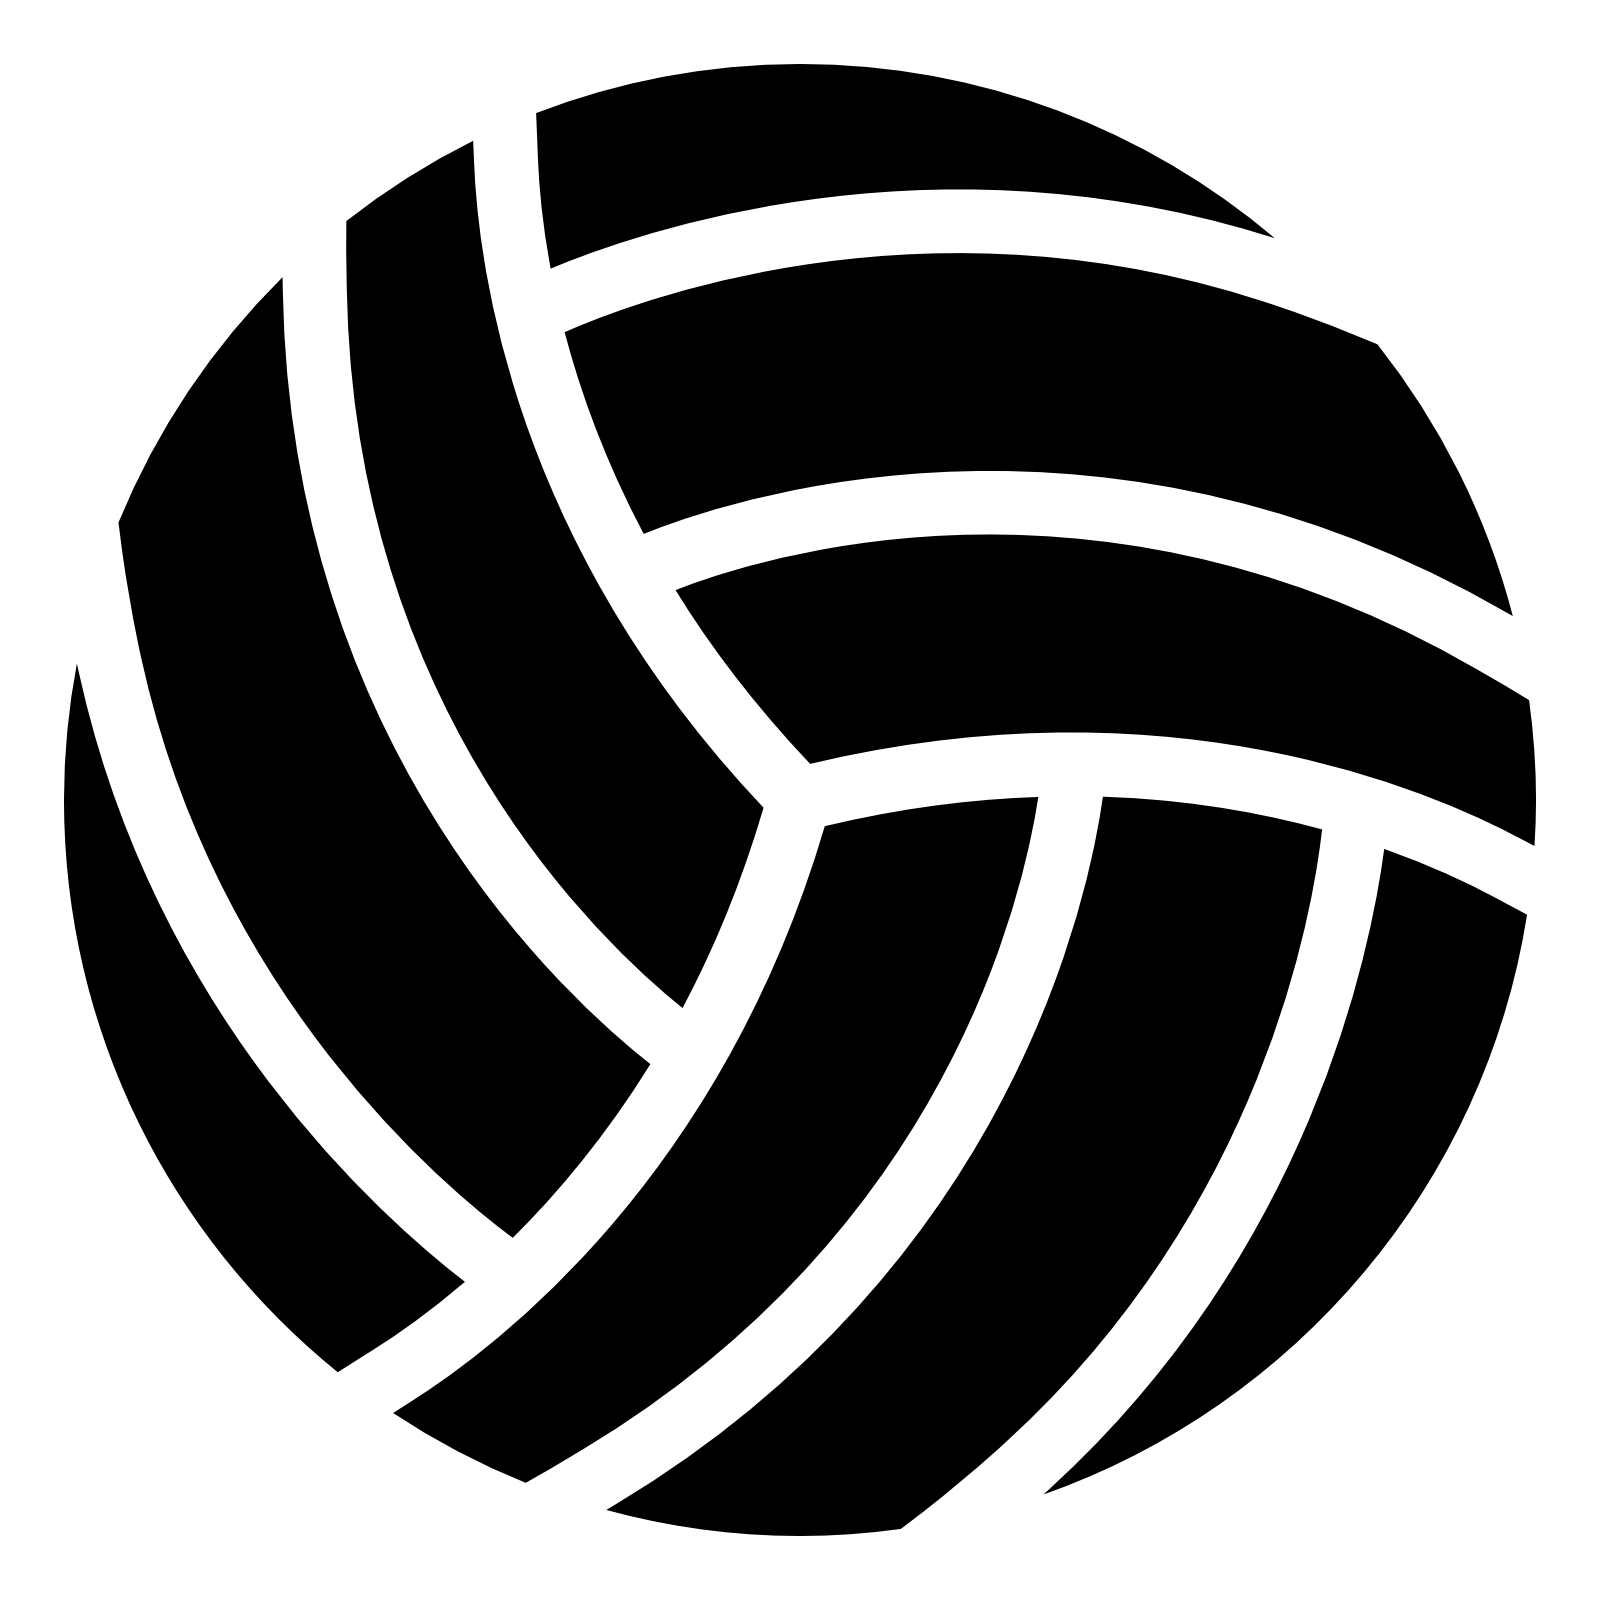 volleyball logo